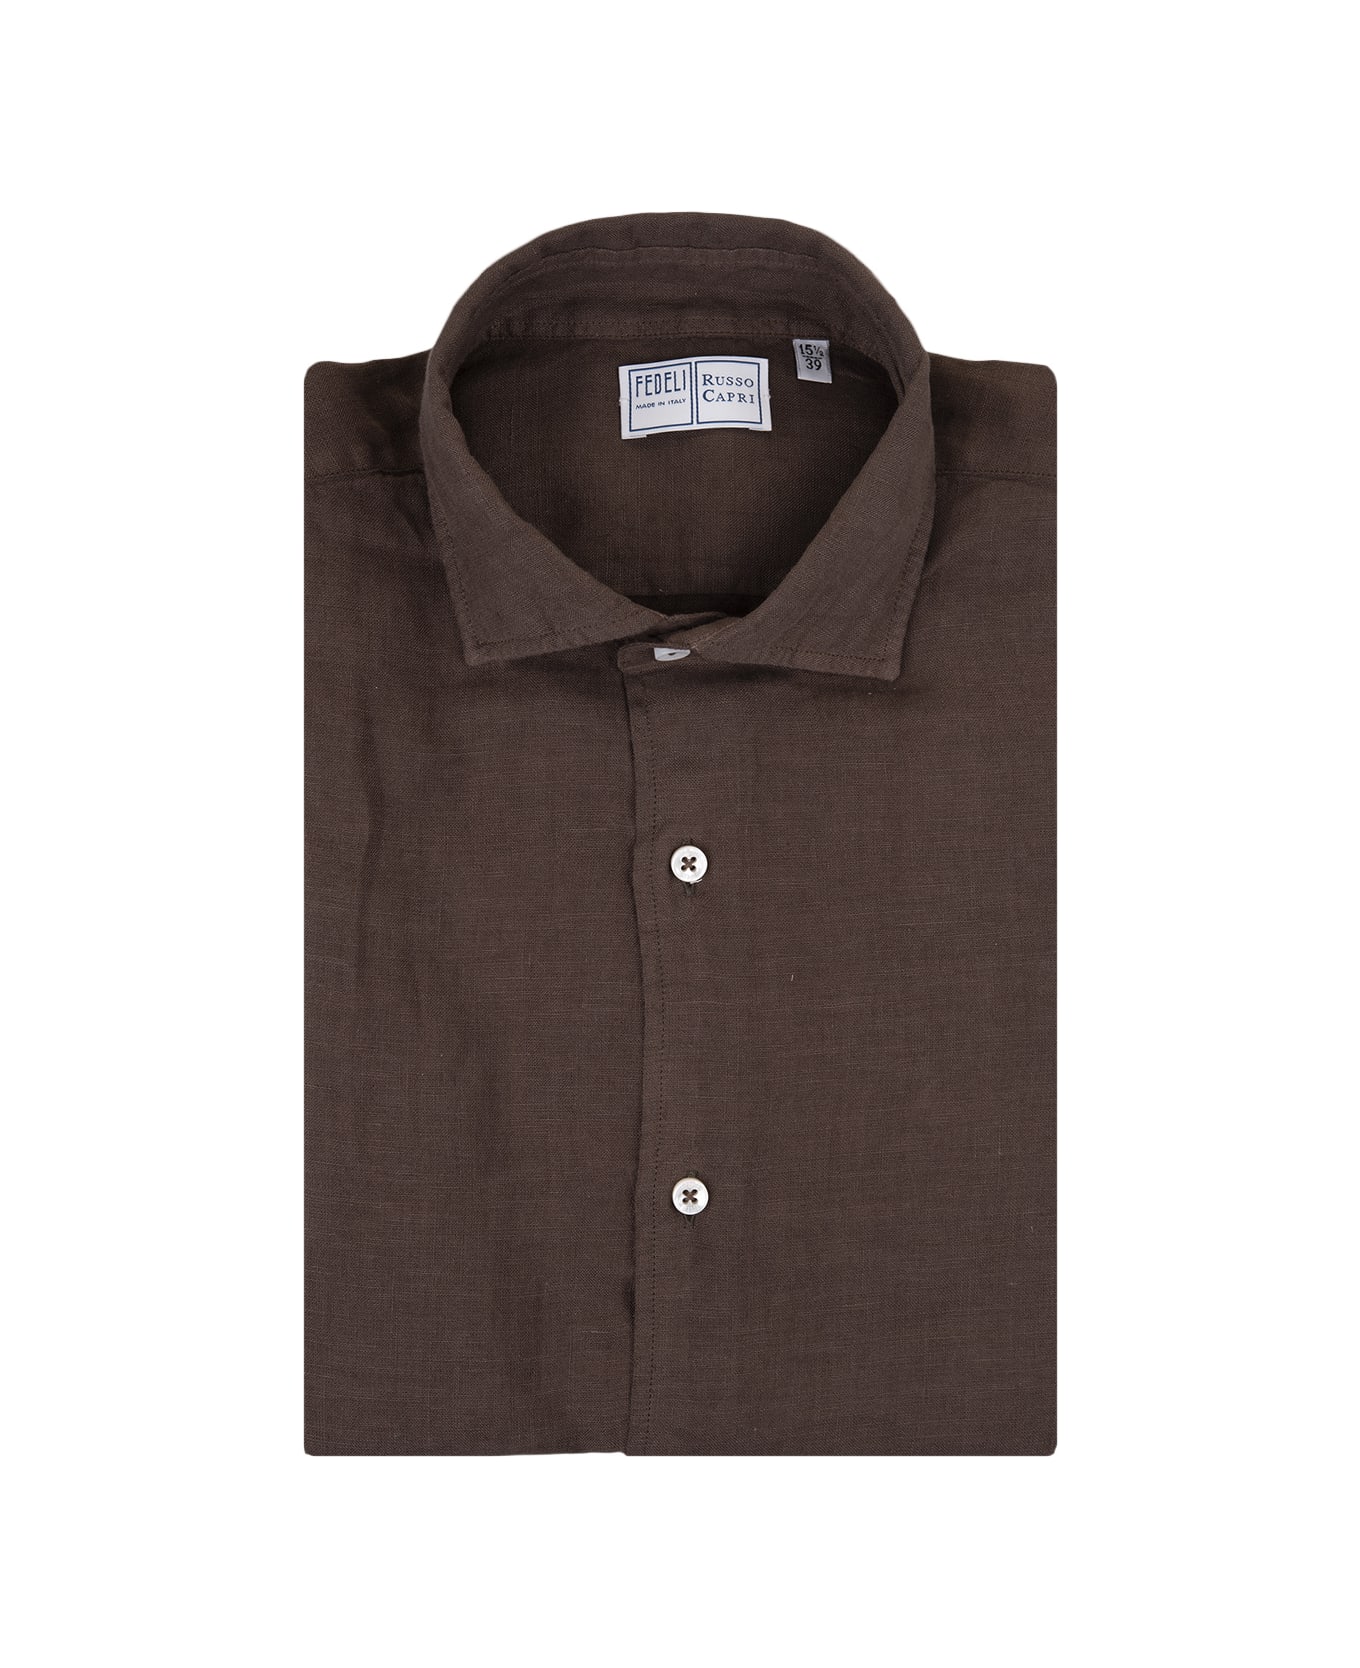 Fedeli Nick Shirt In Brown Linen - Brown